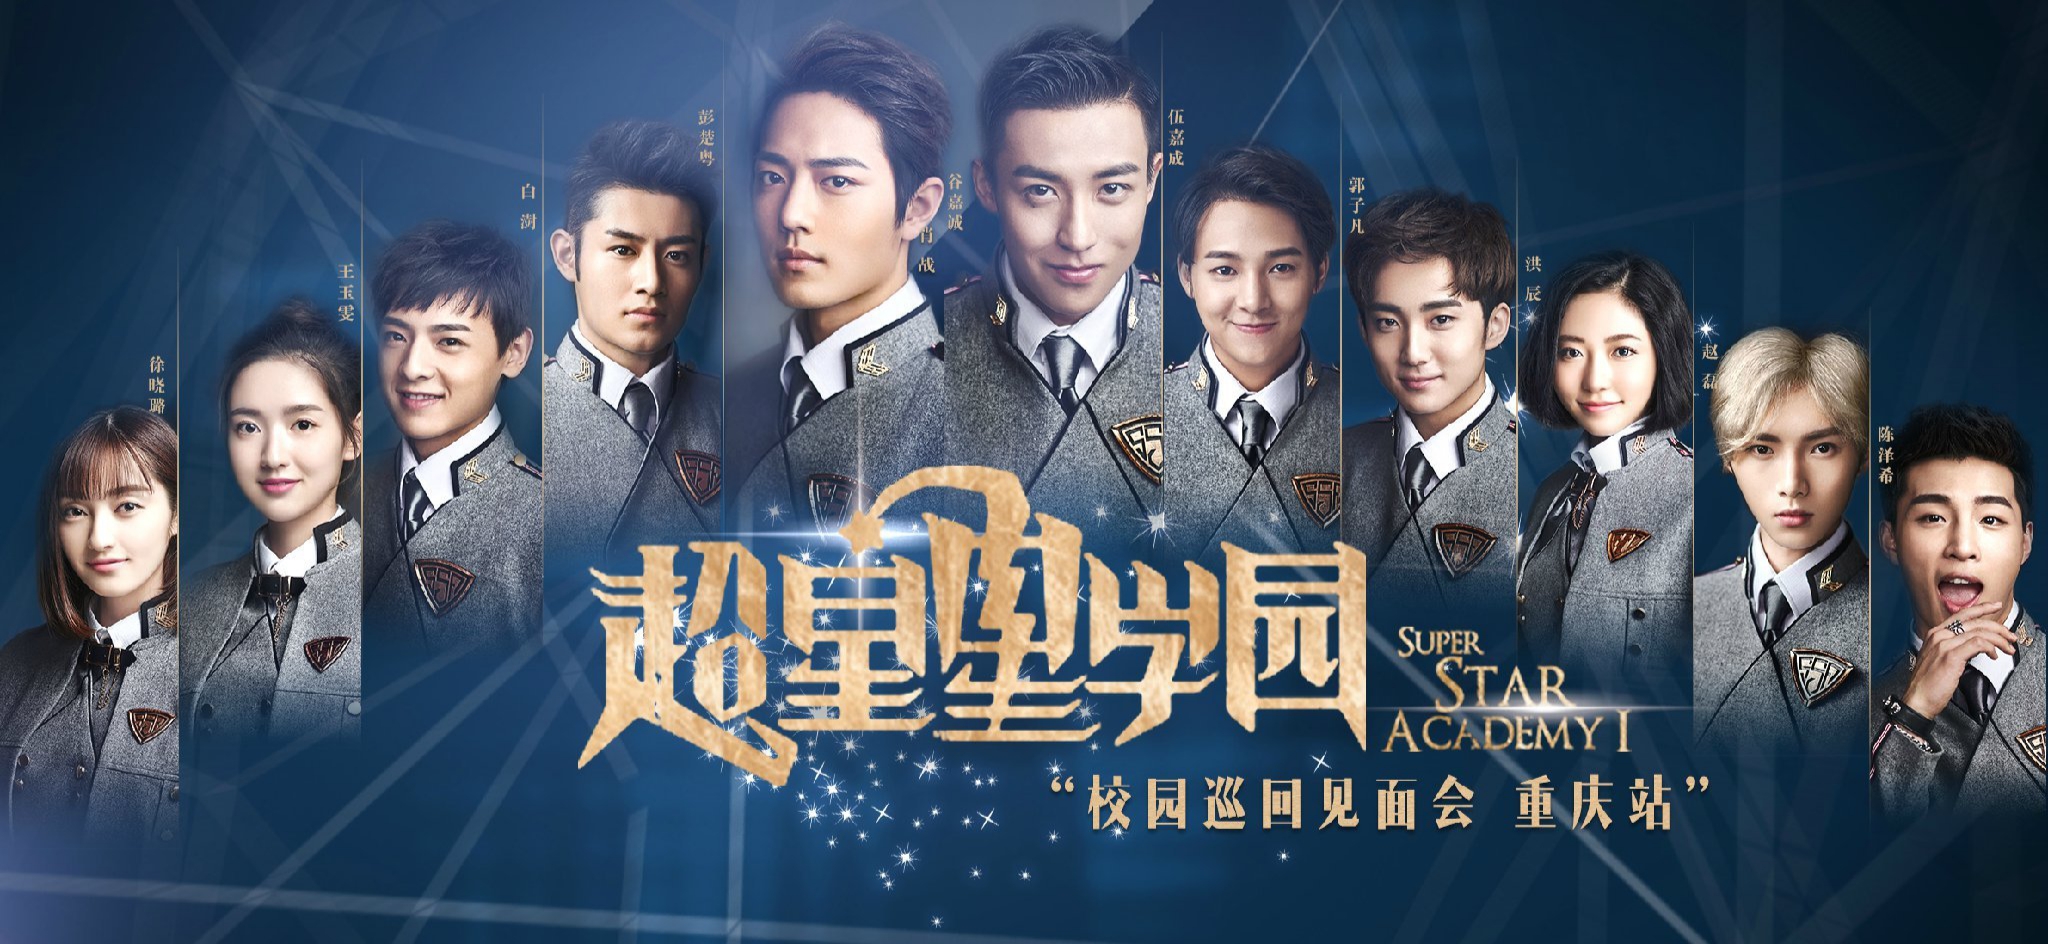 China Drama Review Super Star Academy 